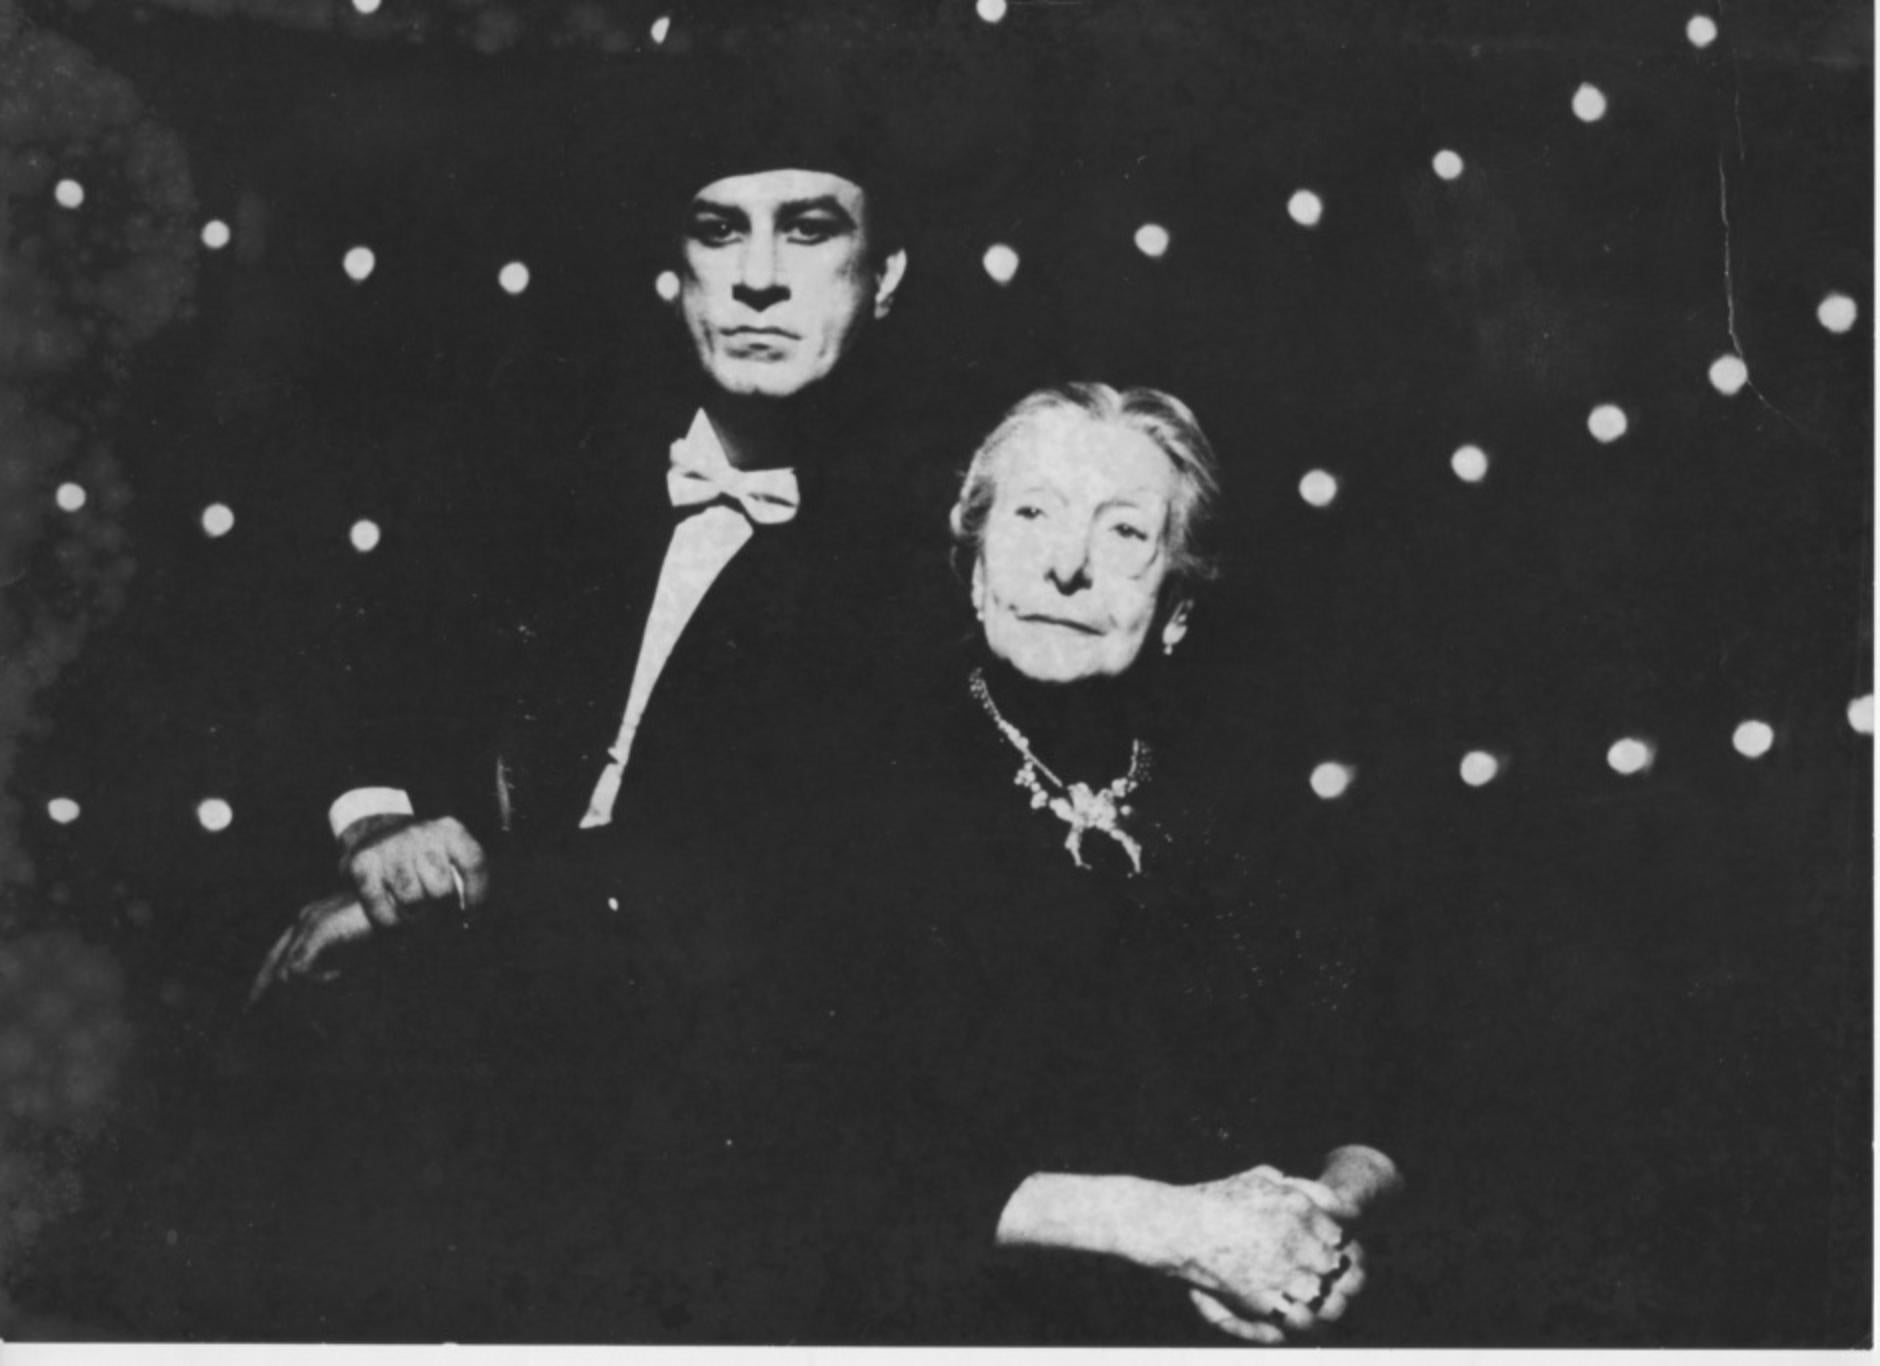 The Actors Paola Borboni and Sebastiano Lo Monaco - Vintage Photo -1980s